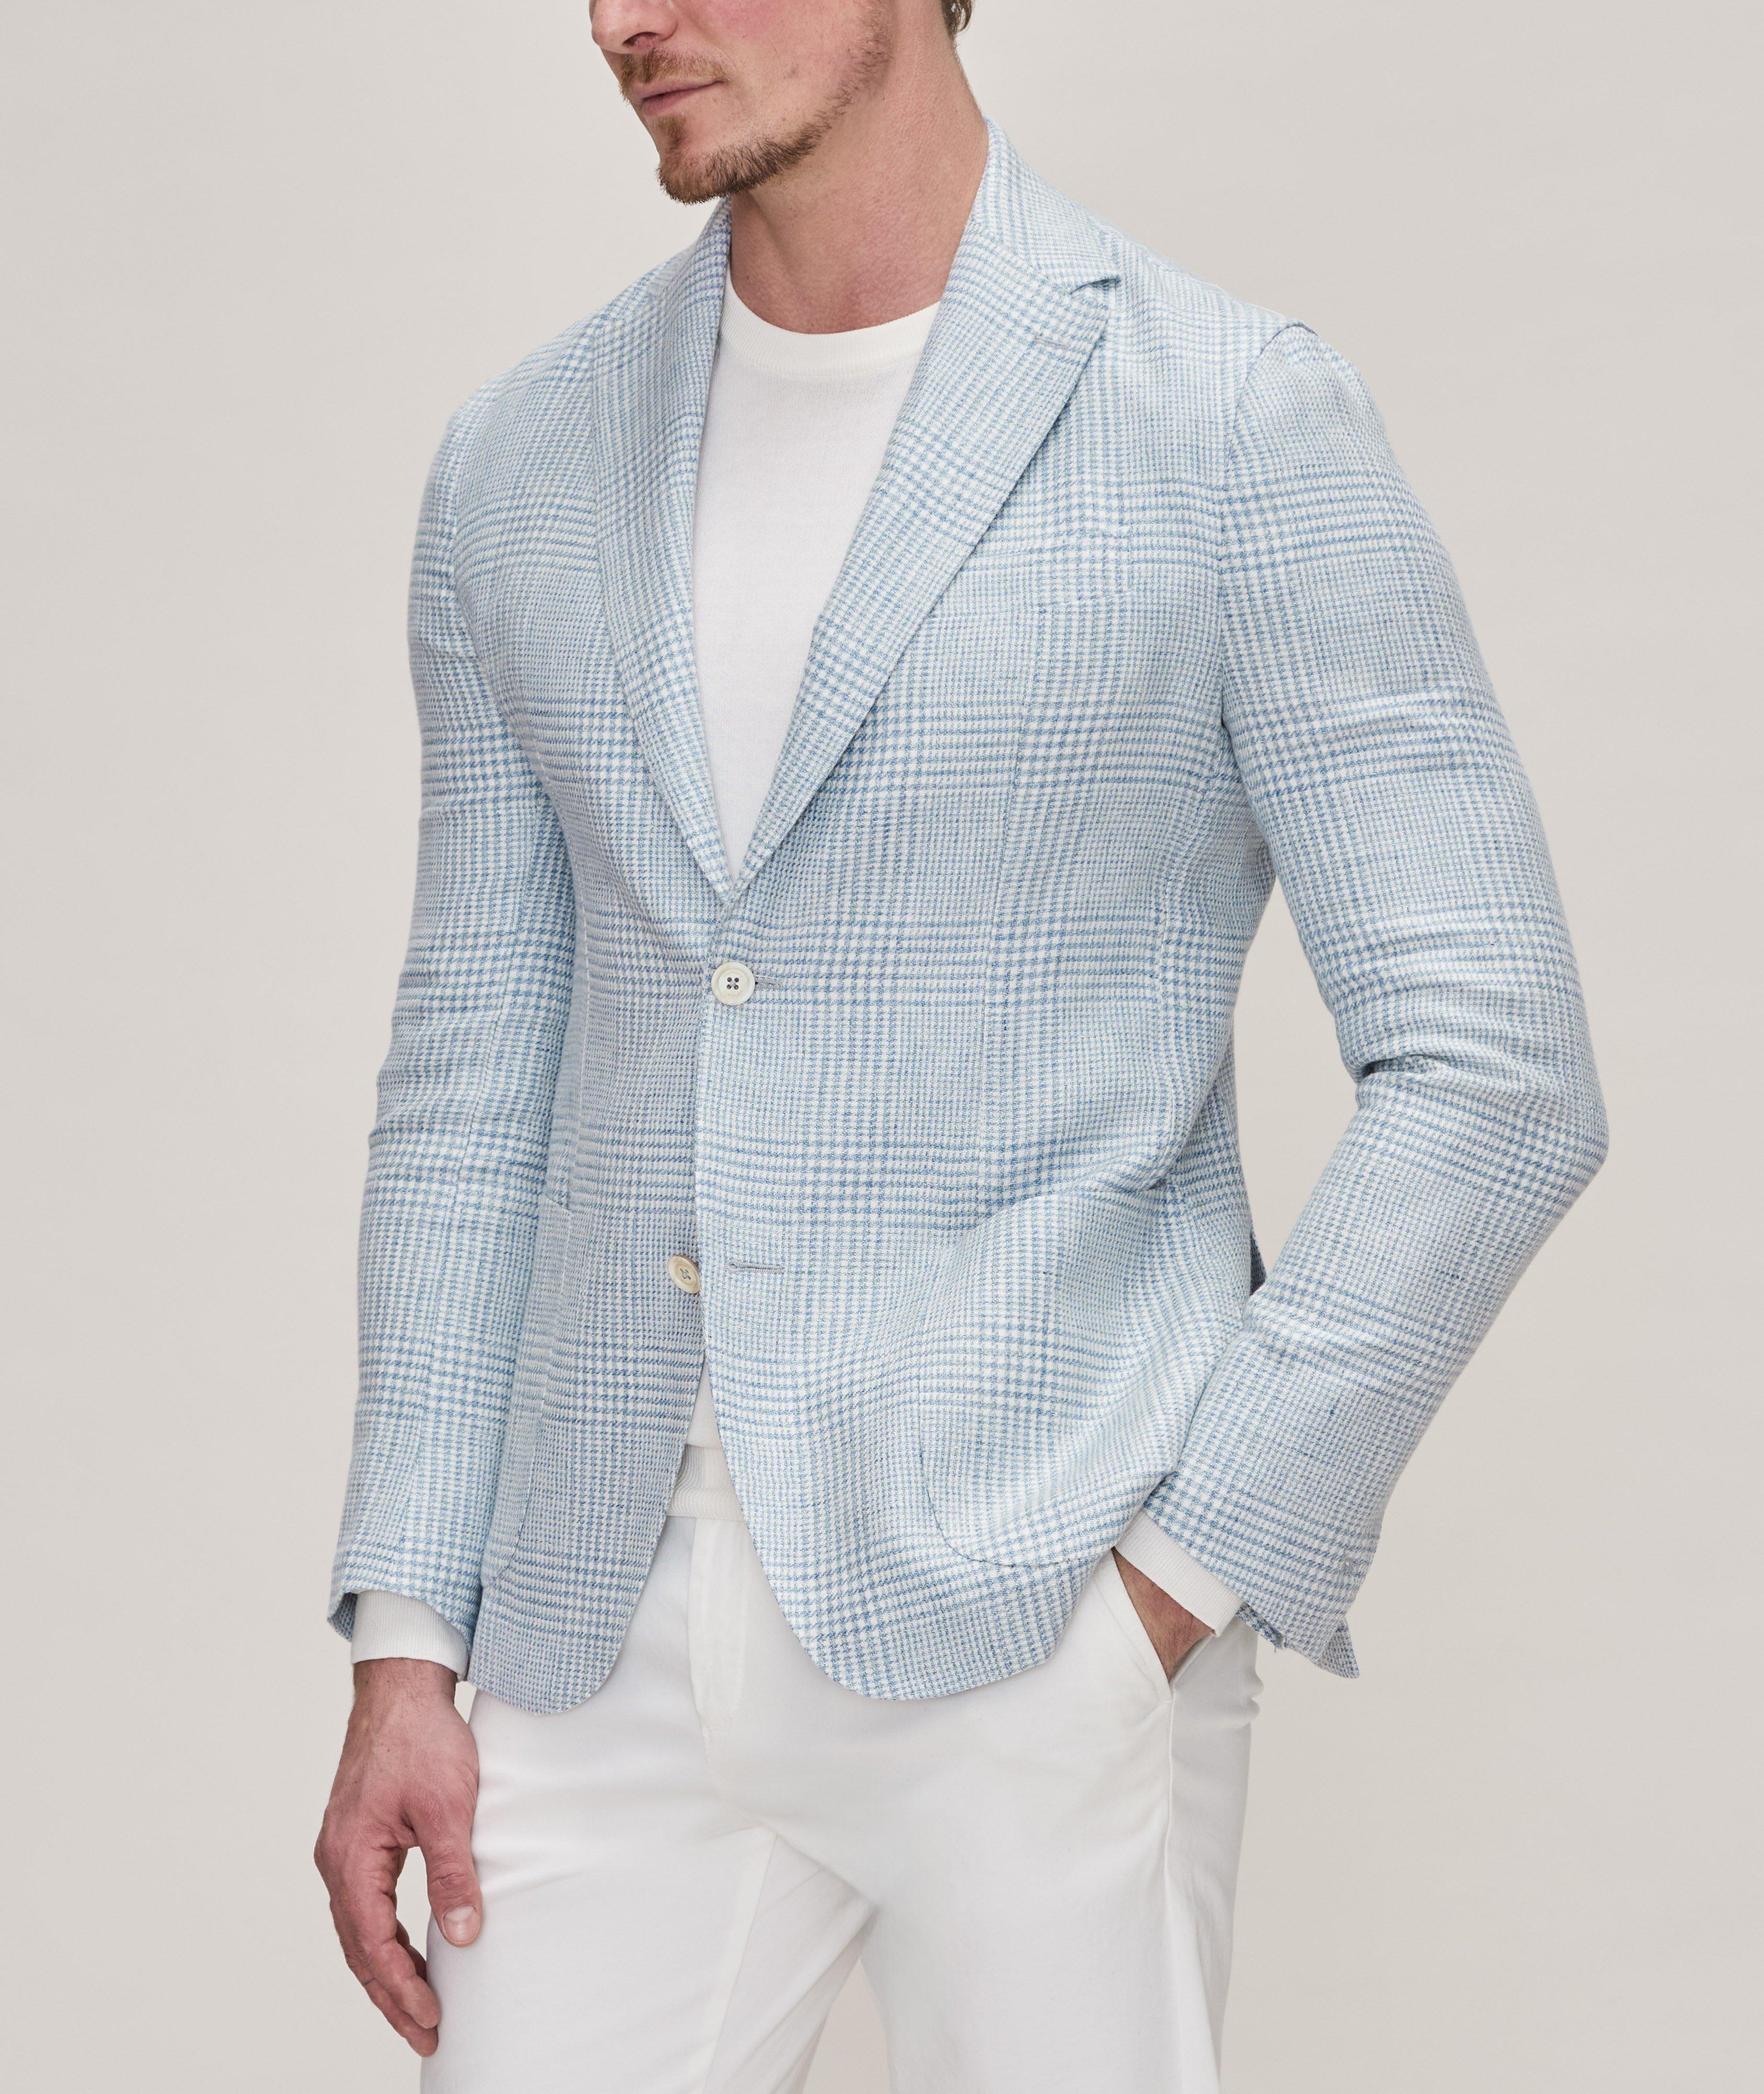 Platinum Collection Houndstooth Linen, Wool & Silk Sport Jacket image 1